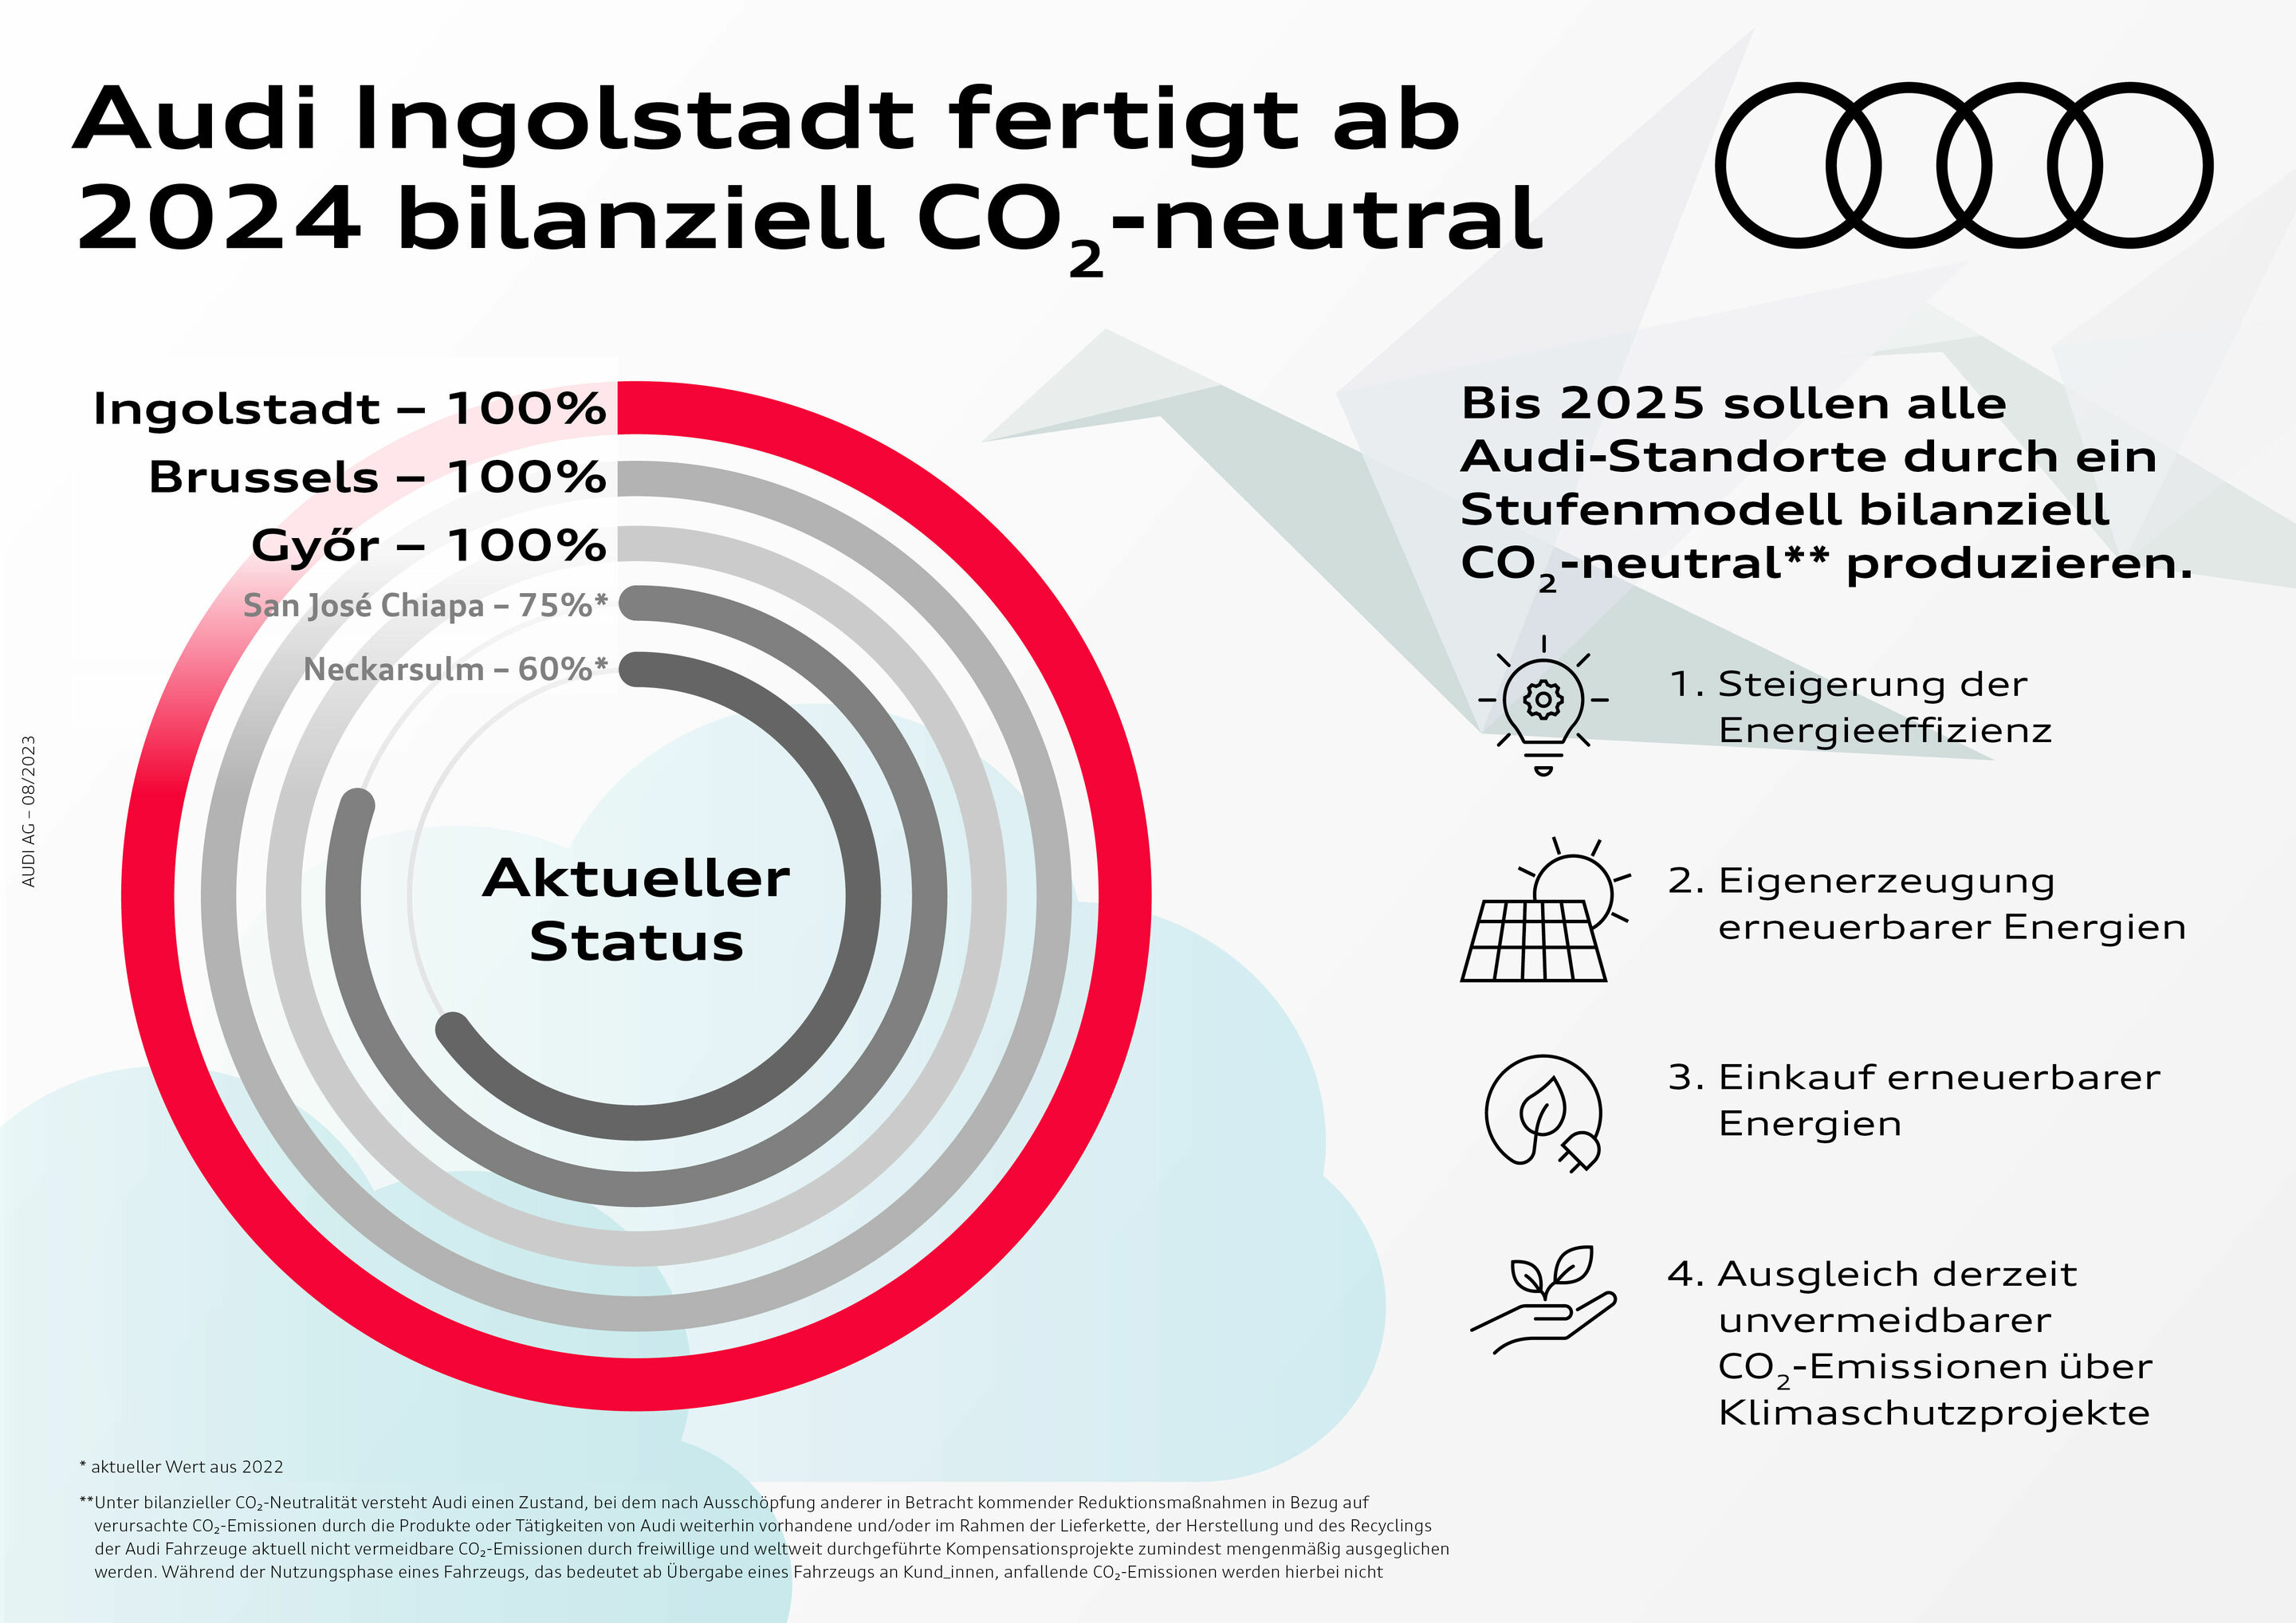 Audi Ingolstadt fertigt ab 2024 bilanziell CO2-neutral